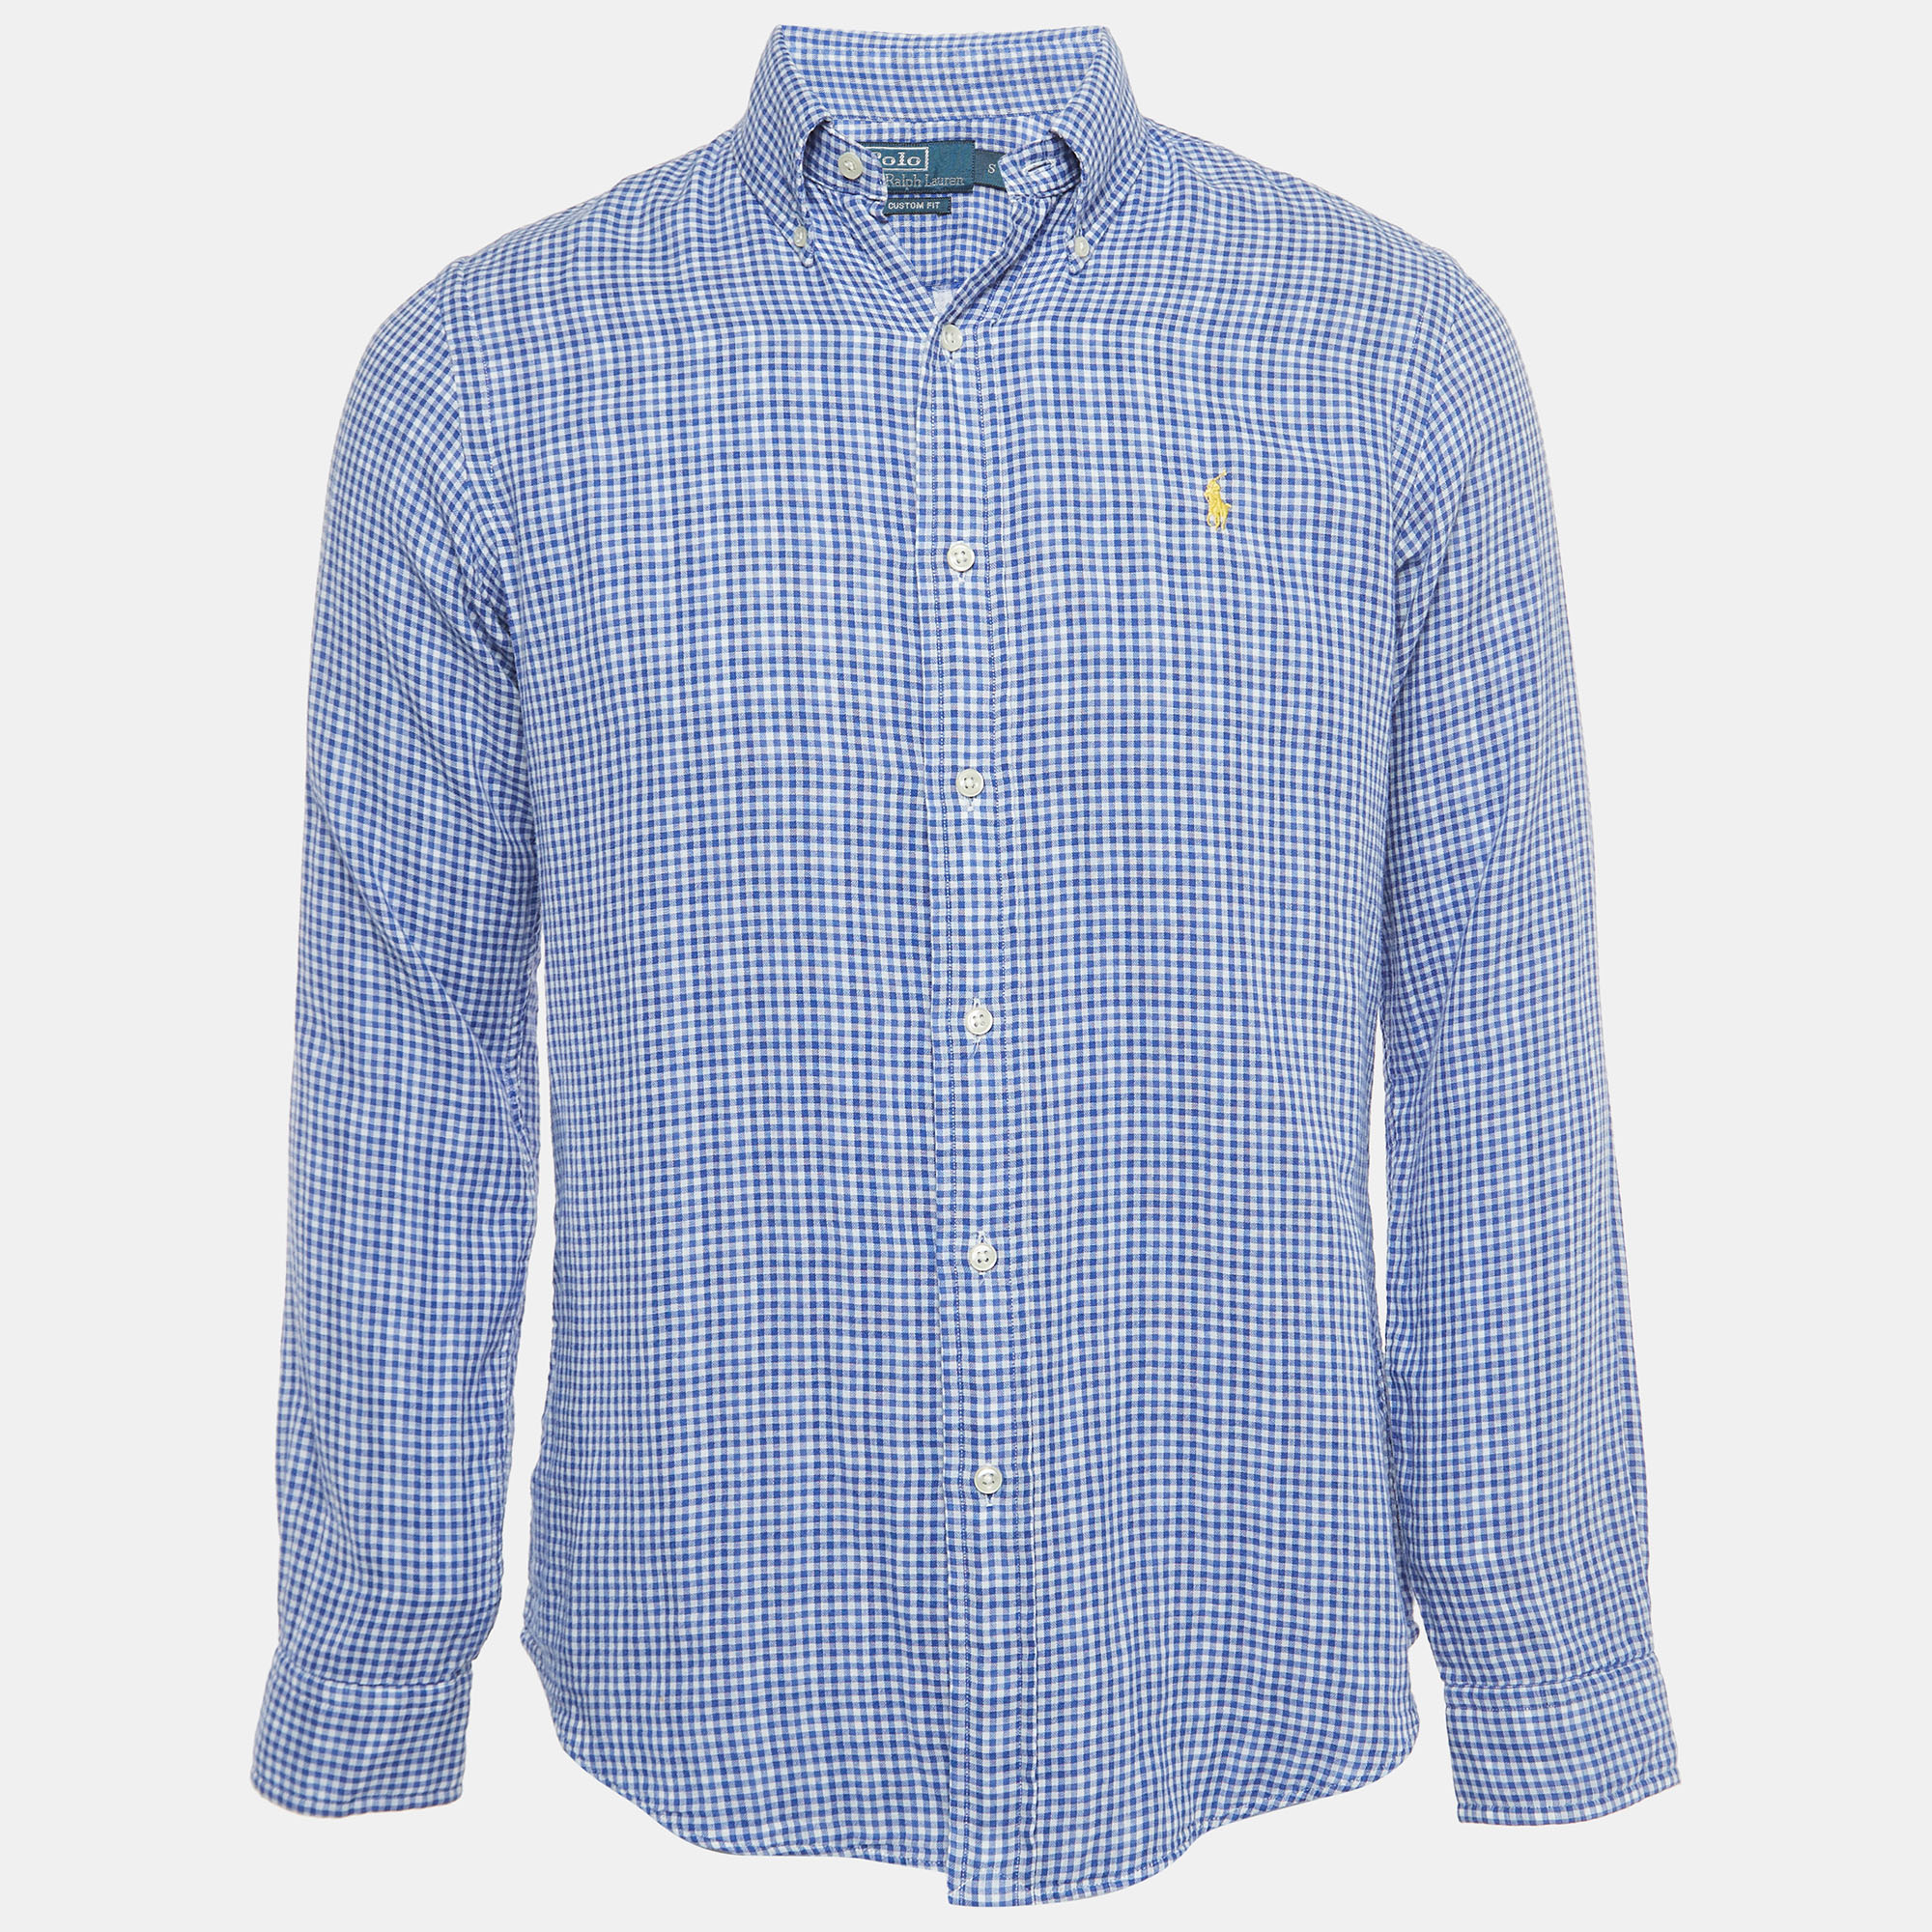 Polo ralph lauren blue checked cotton button front shirt s